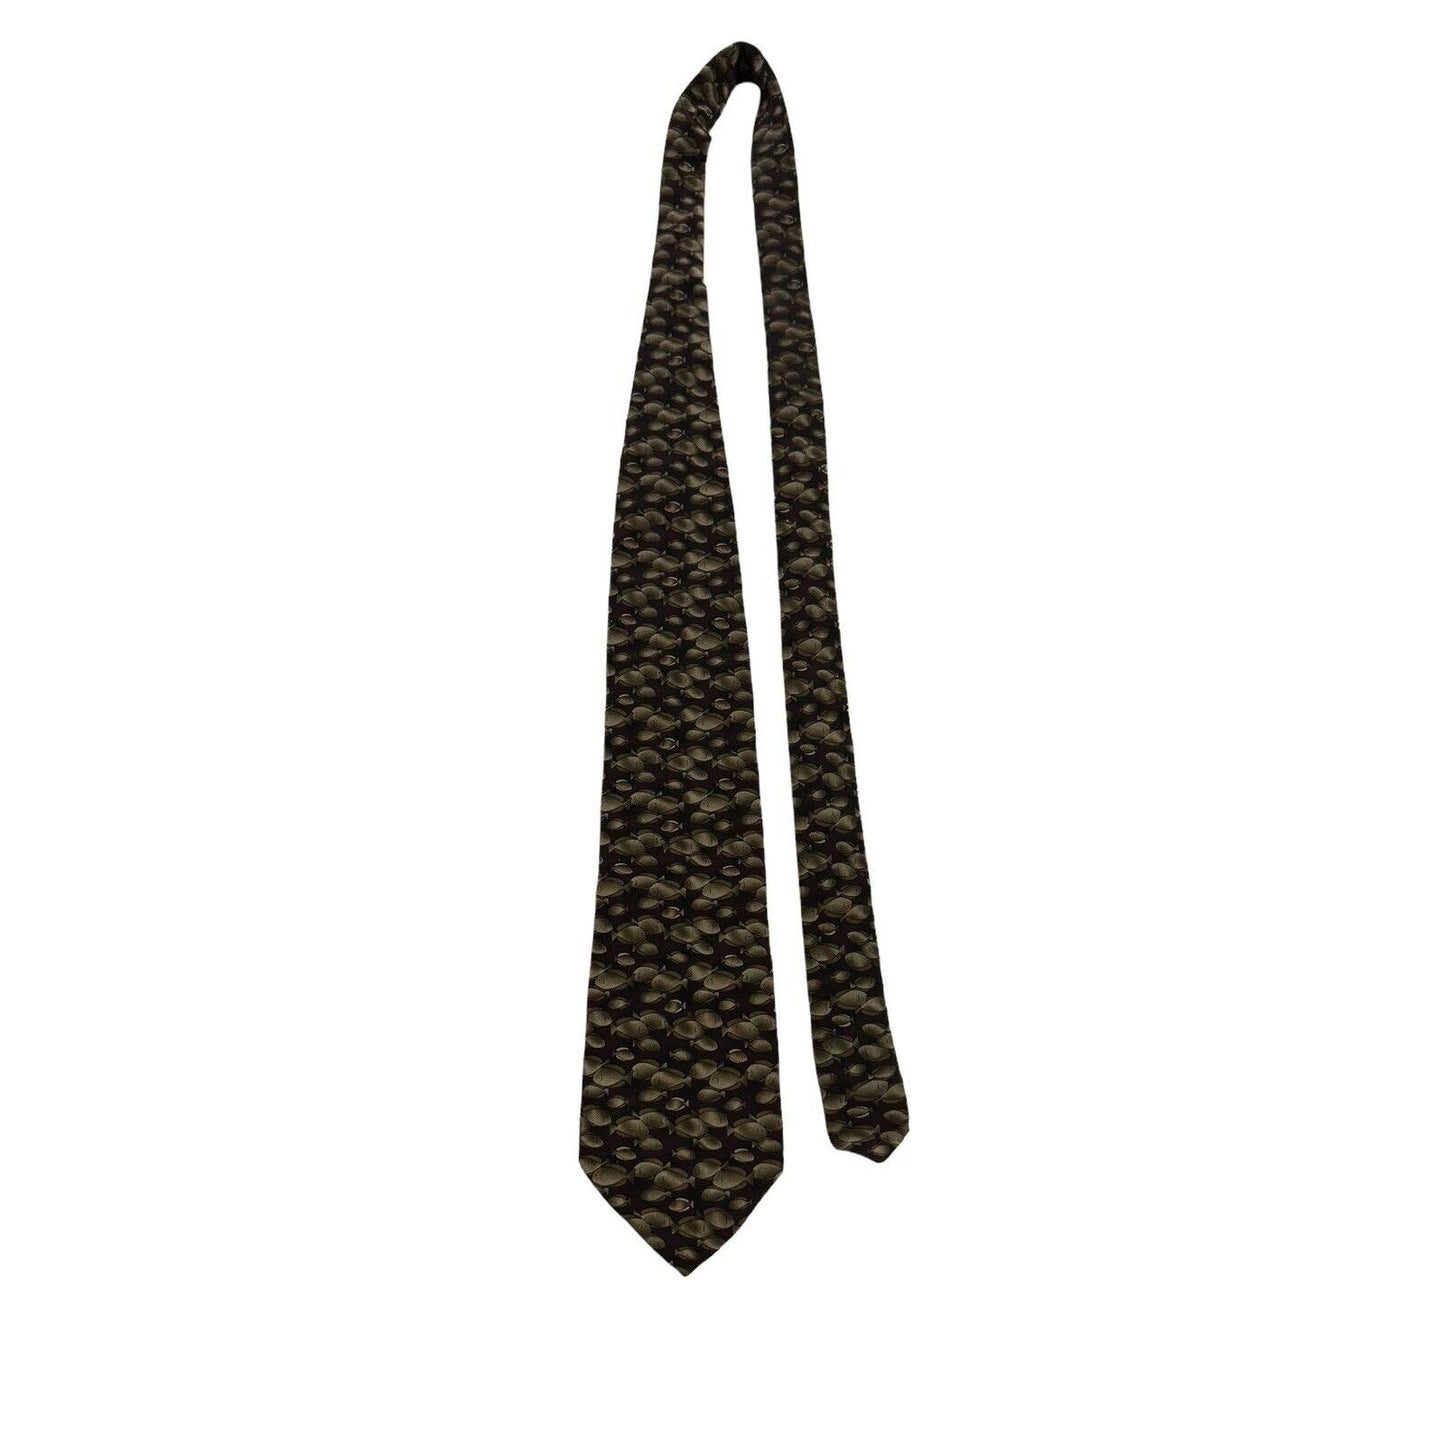 Ties To Nature Fish Vintage Novelty 100% Silk Necktie